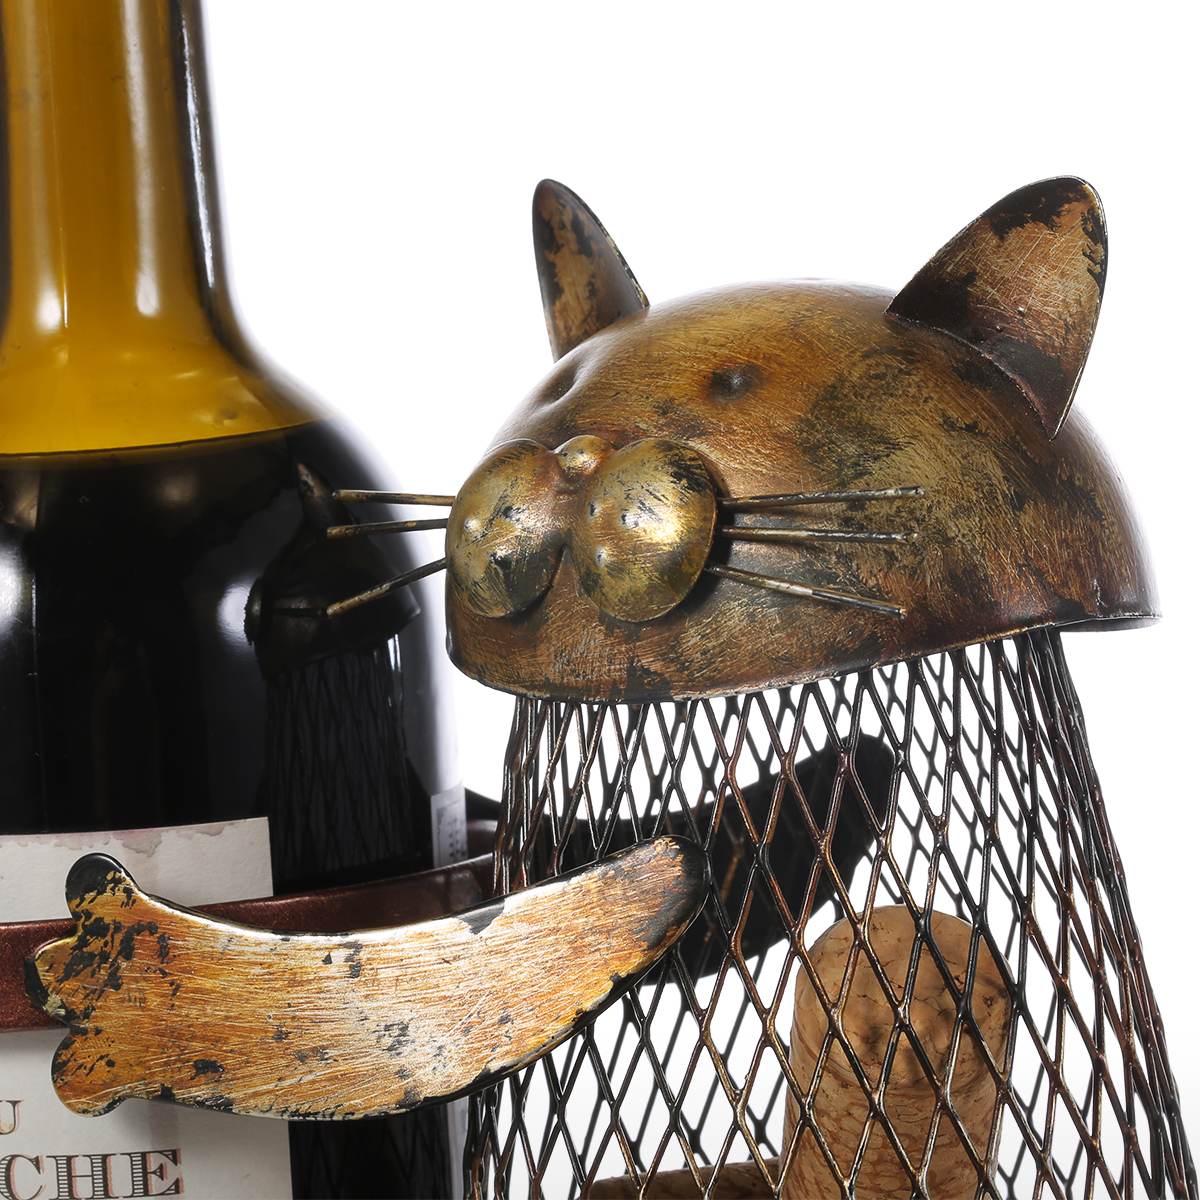 Tooarts Cat Wine Rack Cork Container Bottle Holder Kitchen Bar Display Metal 